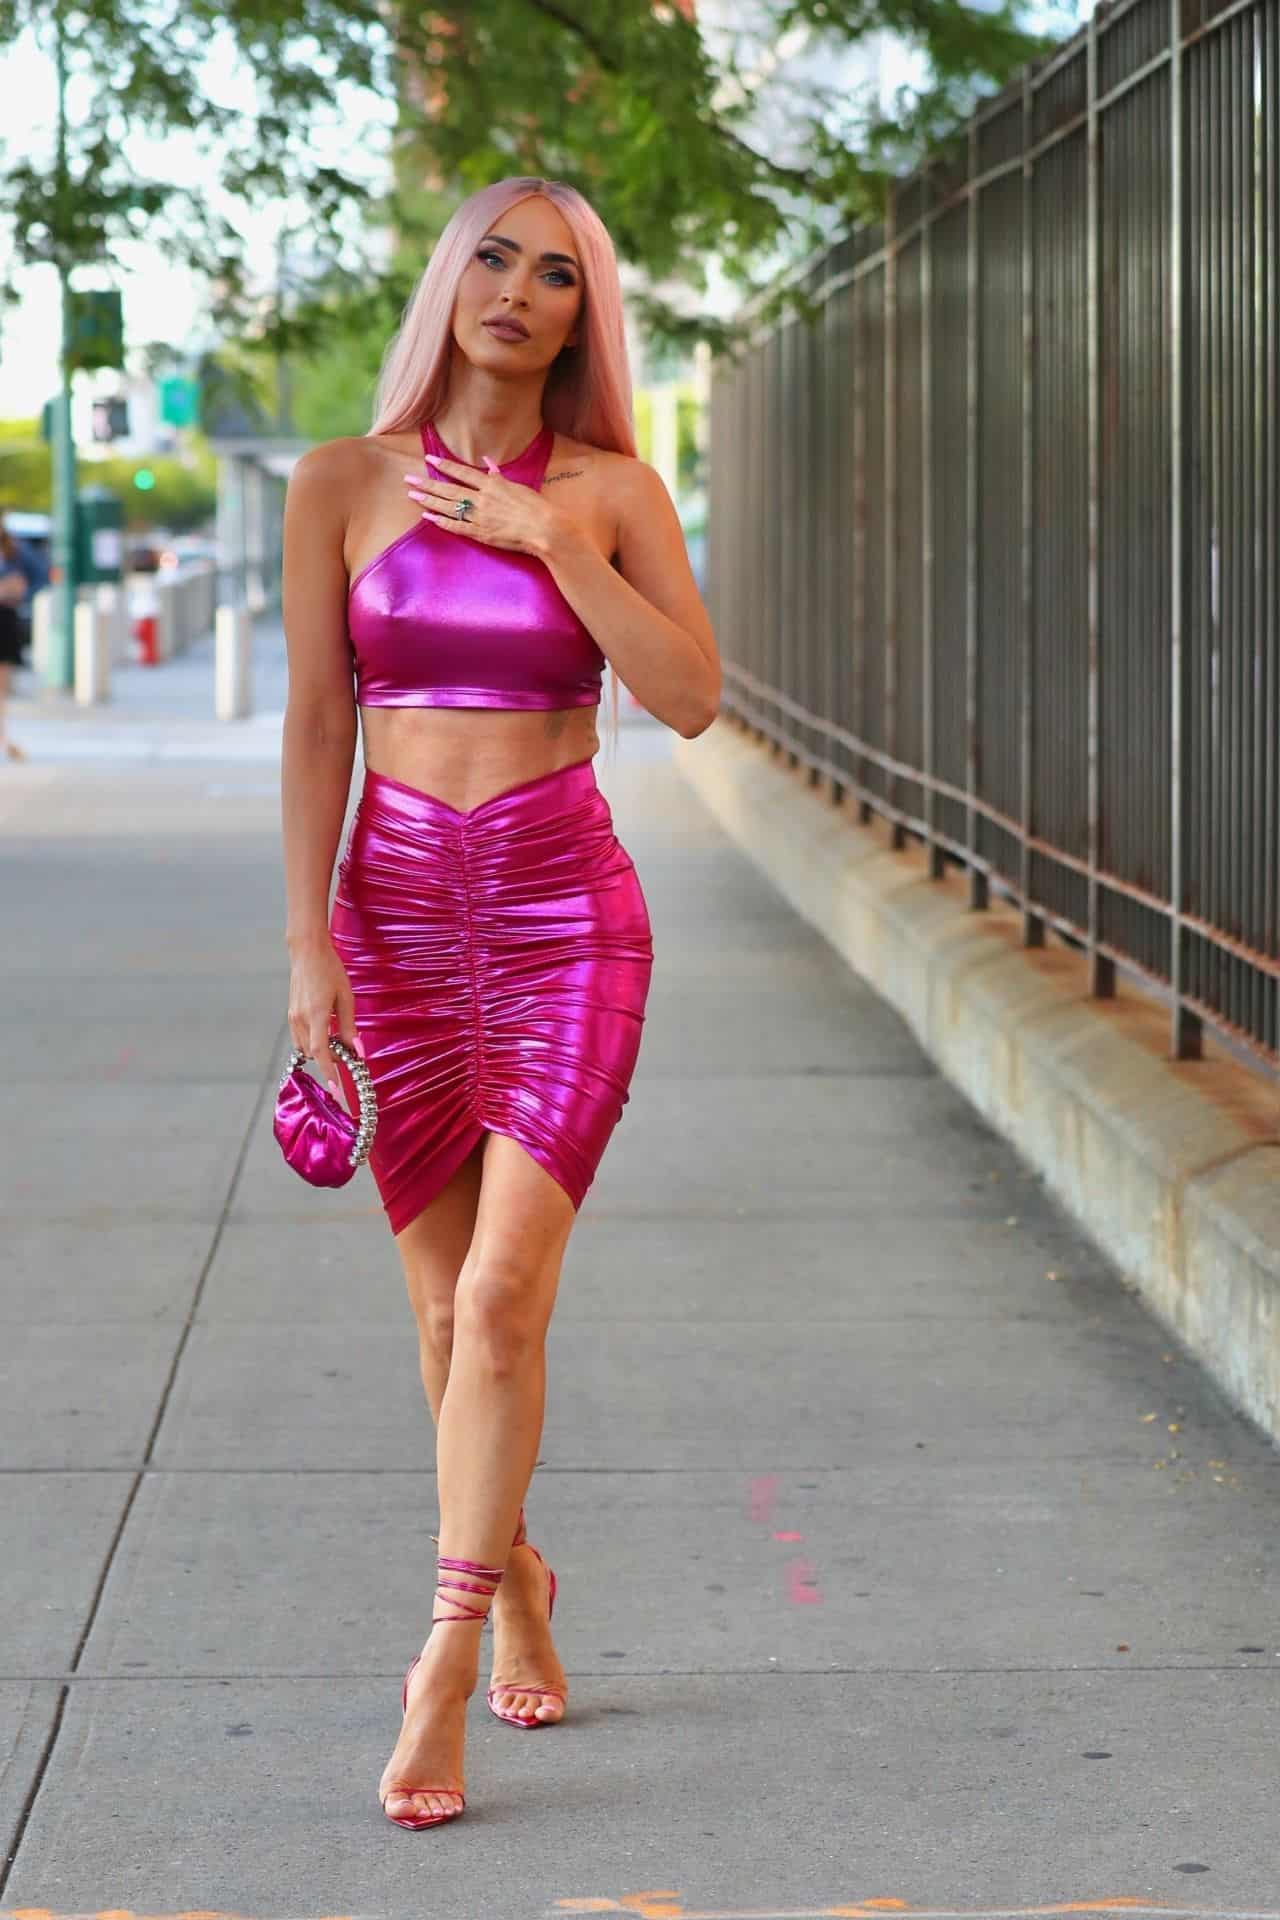 Megan Fox is a Real Barbie Girl in a Hot Metallic Pink Dress